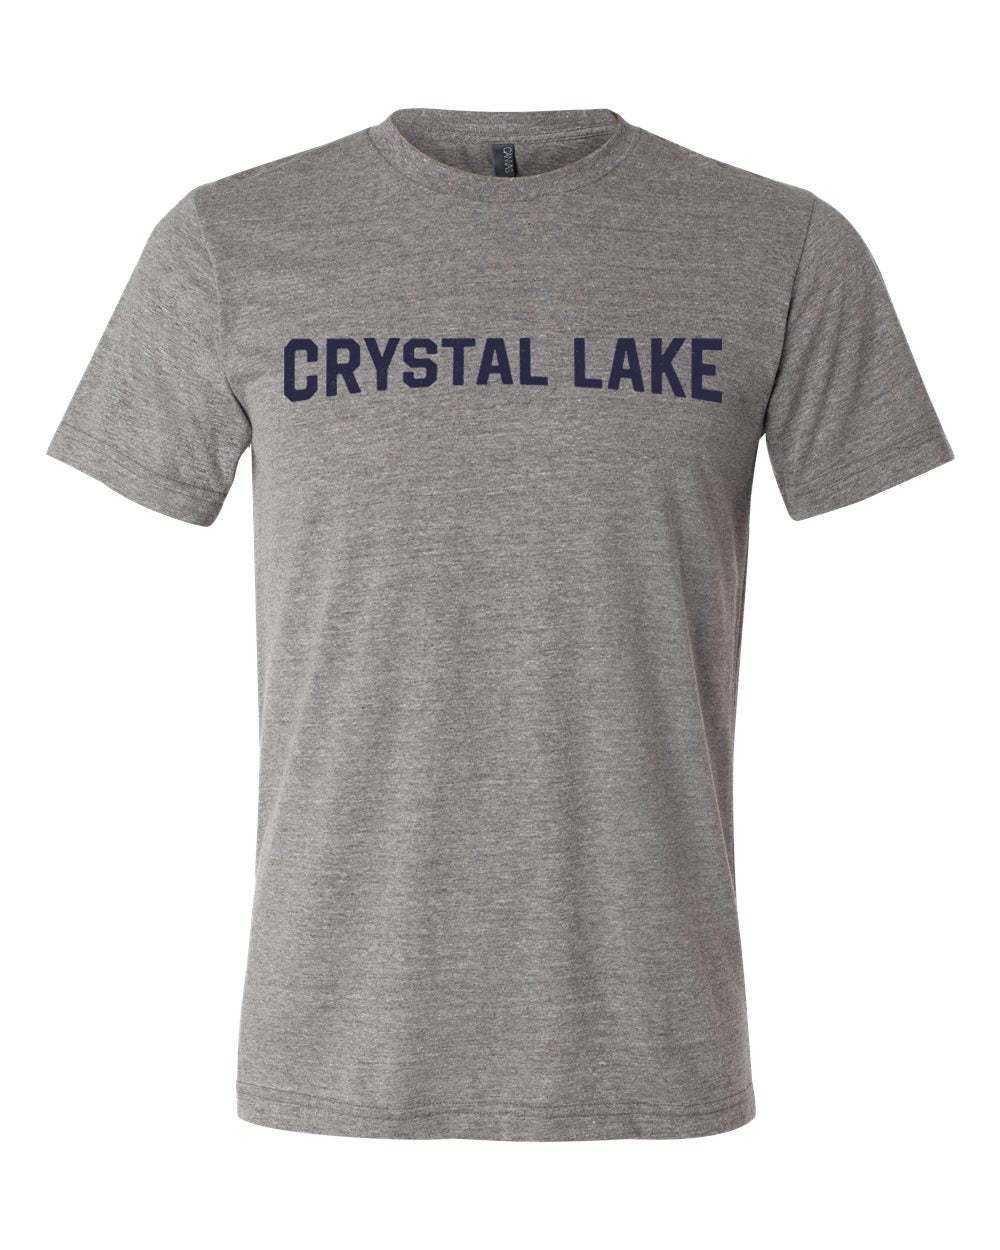 IN STOCK NOW! - Lake Life Crystal Lake Varsity Triblend Tee - premium heather